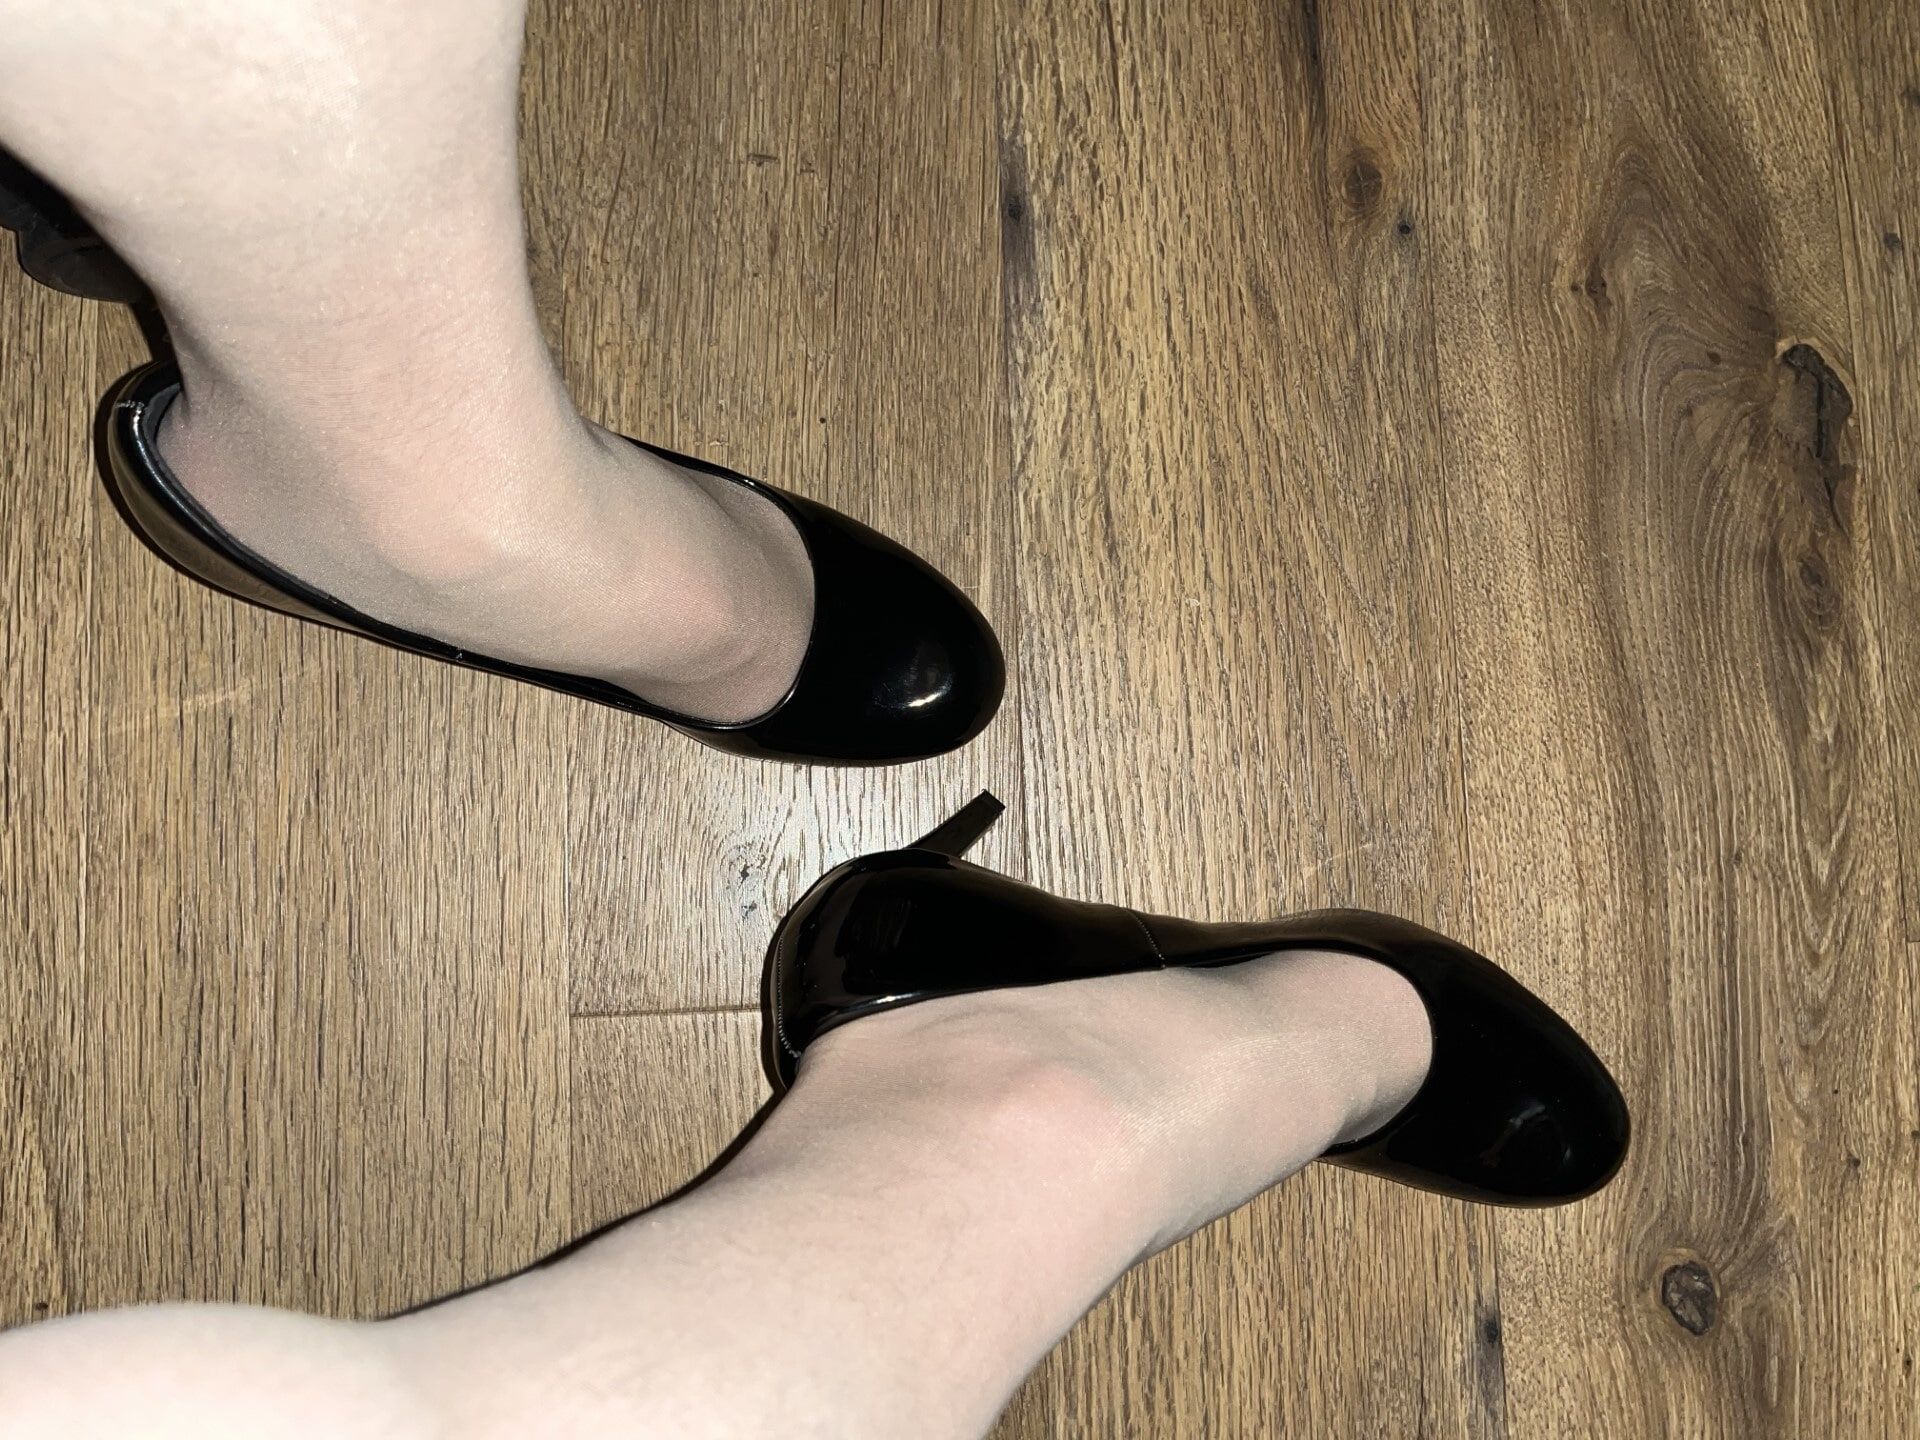 Pantyhose feet #2